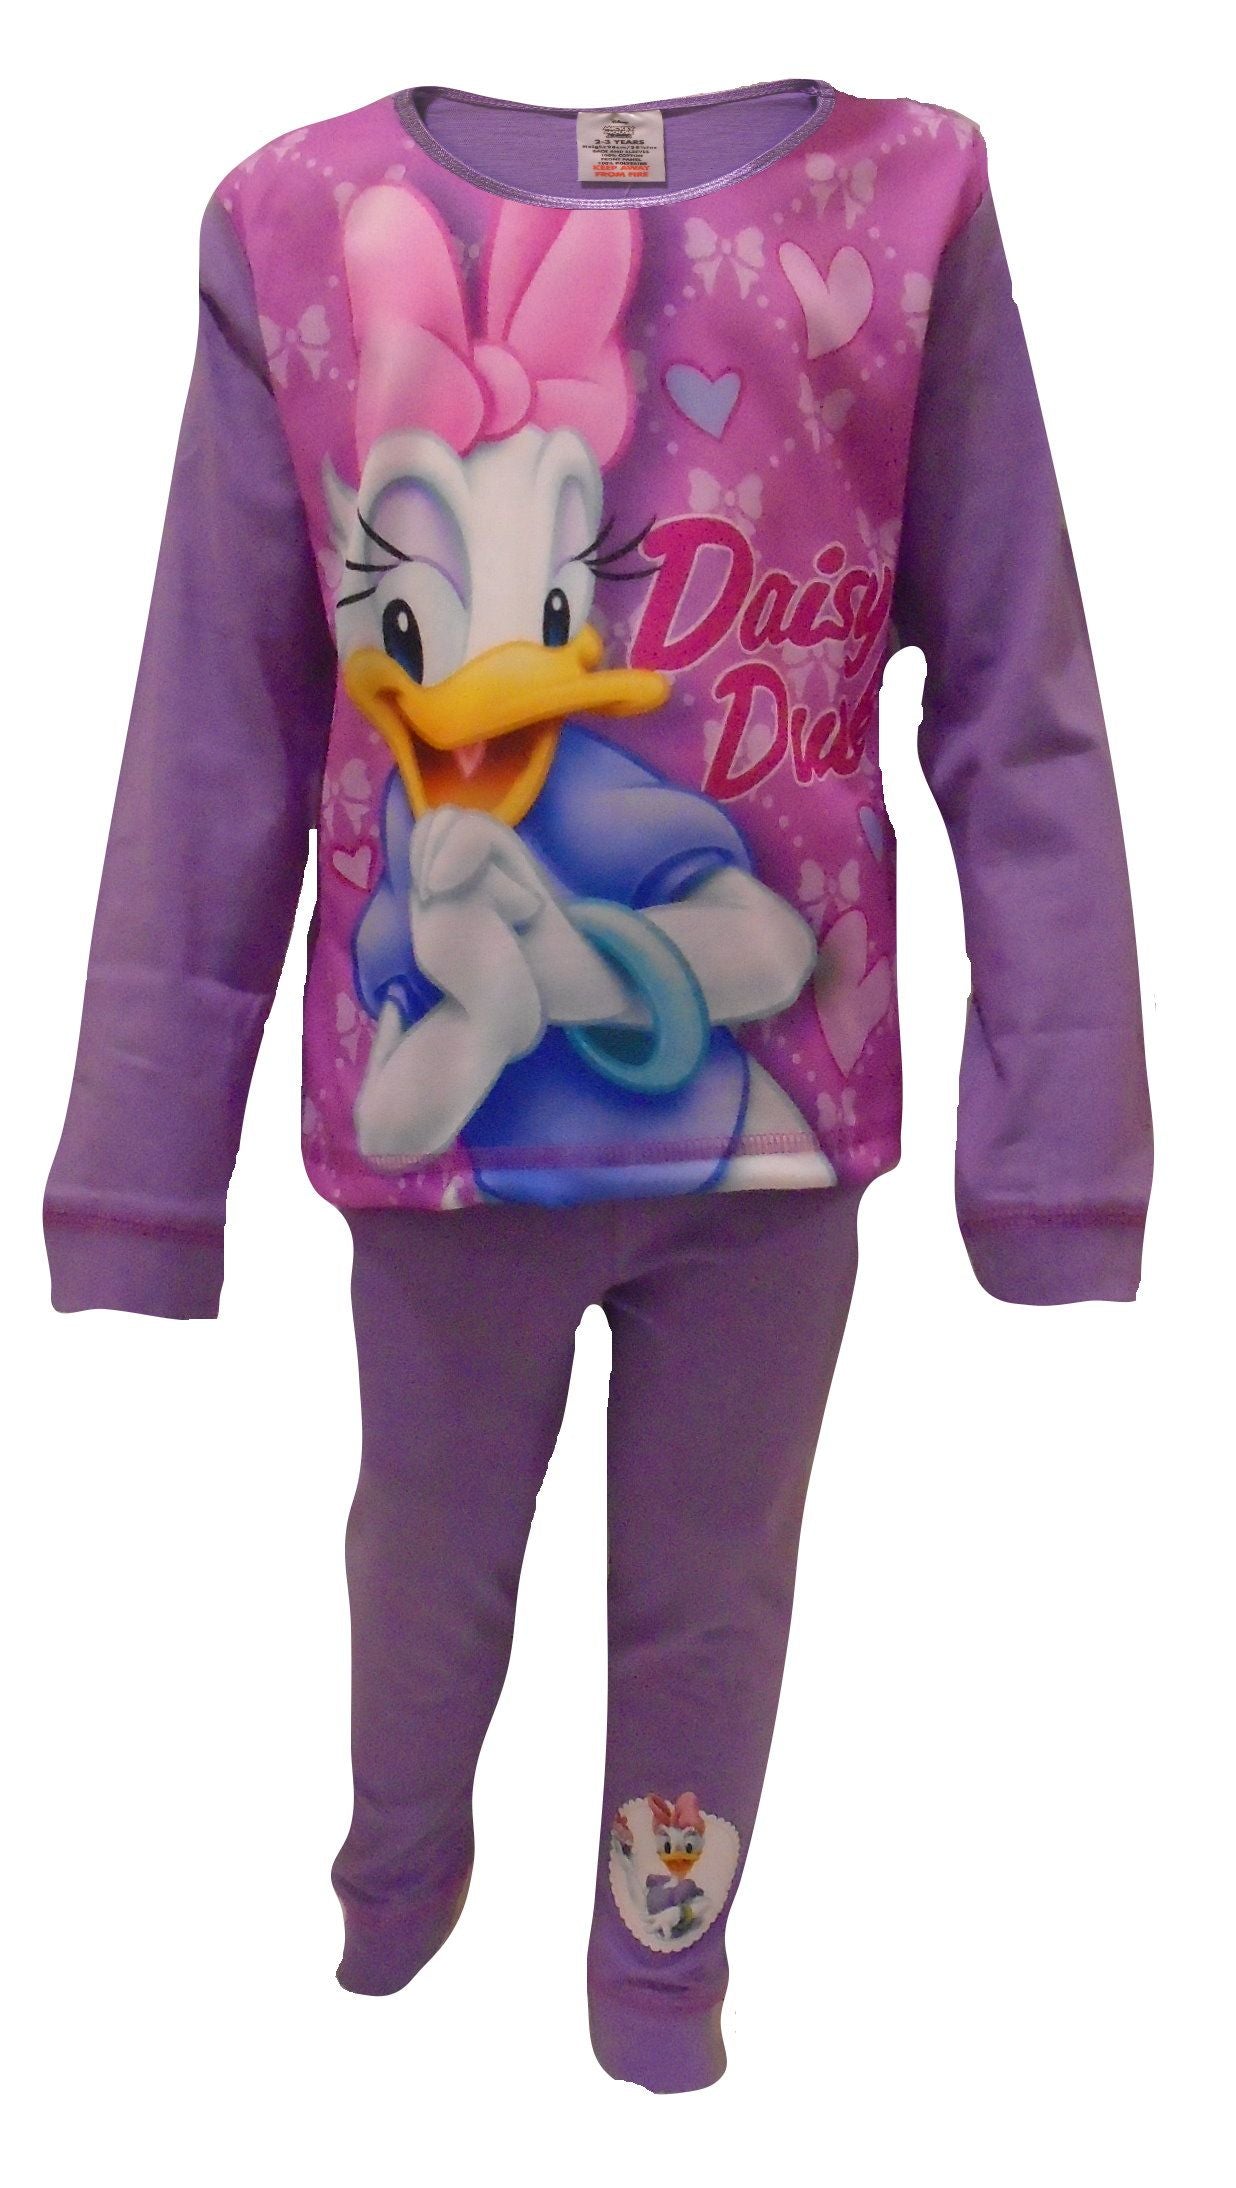 Daisy Duck "Love" Girl's Pyjama Set Nightwear 1-5 Years